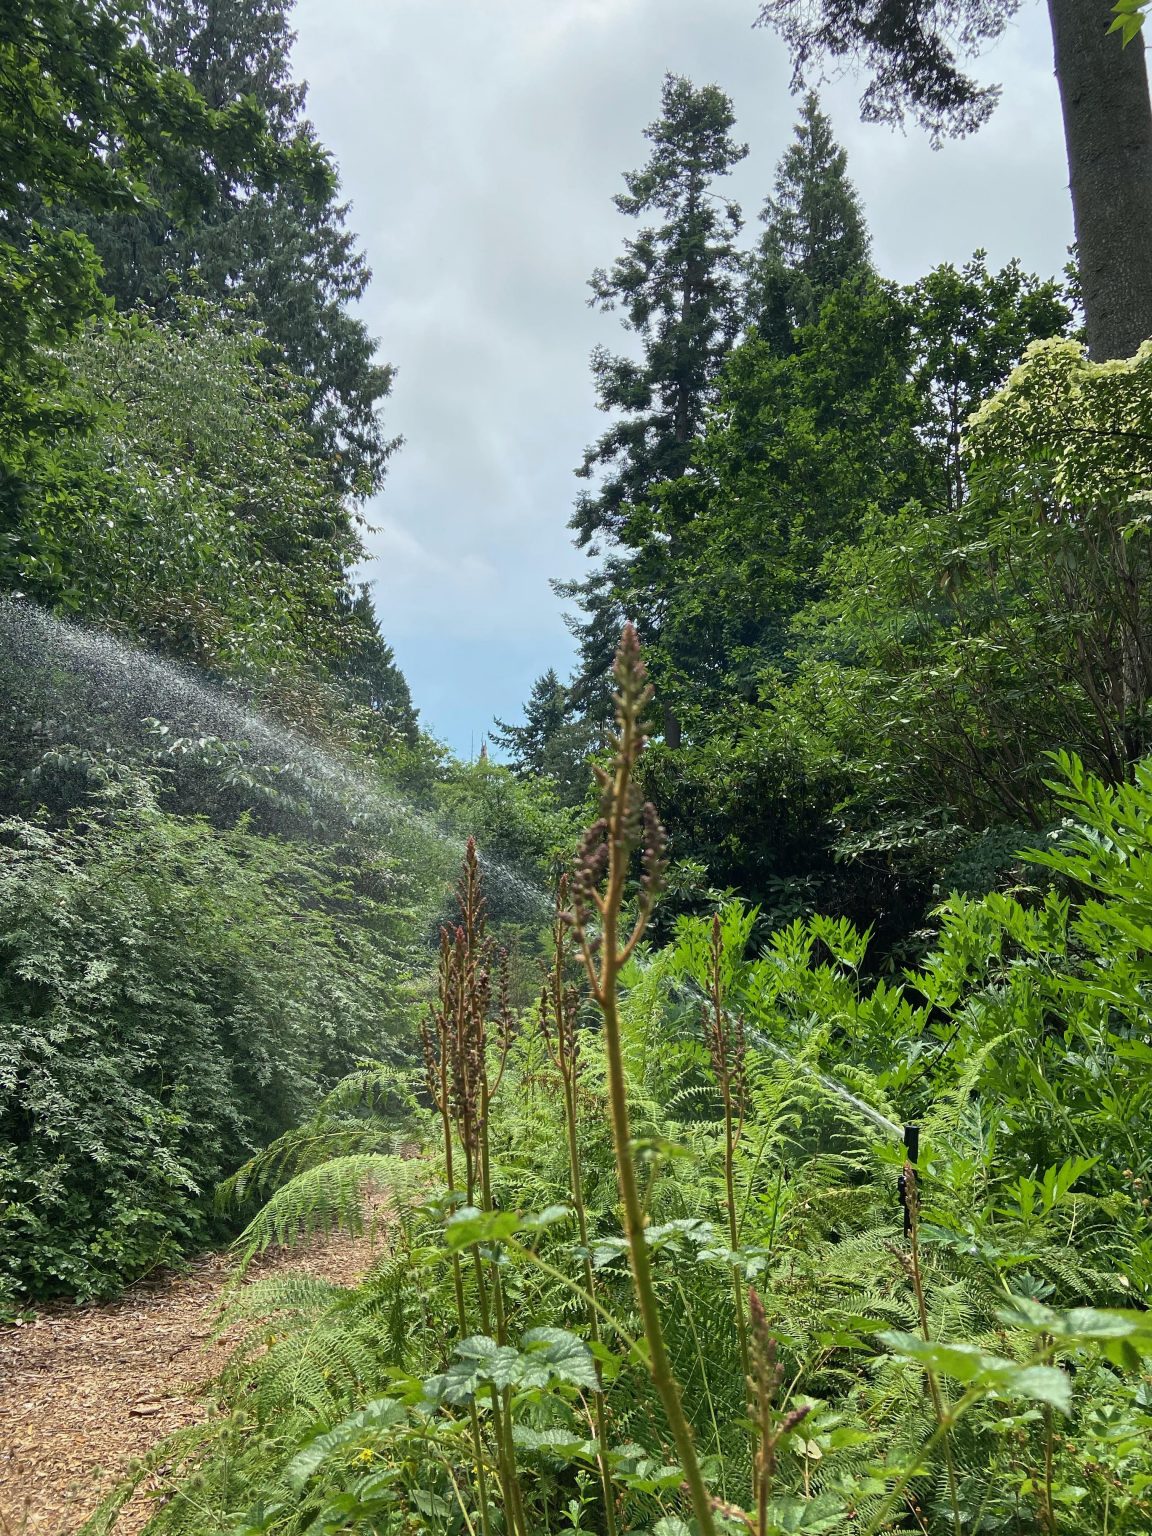 Water irrigation system sprinkling water across Garden path